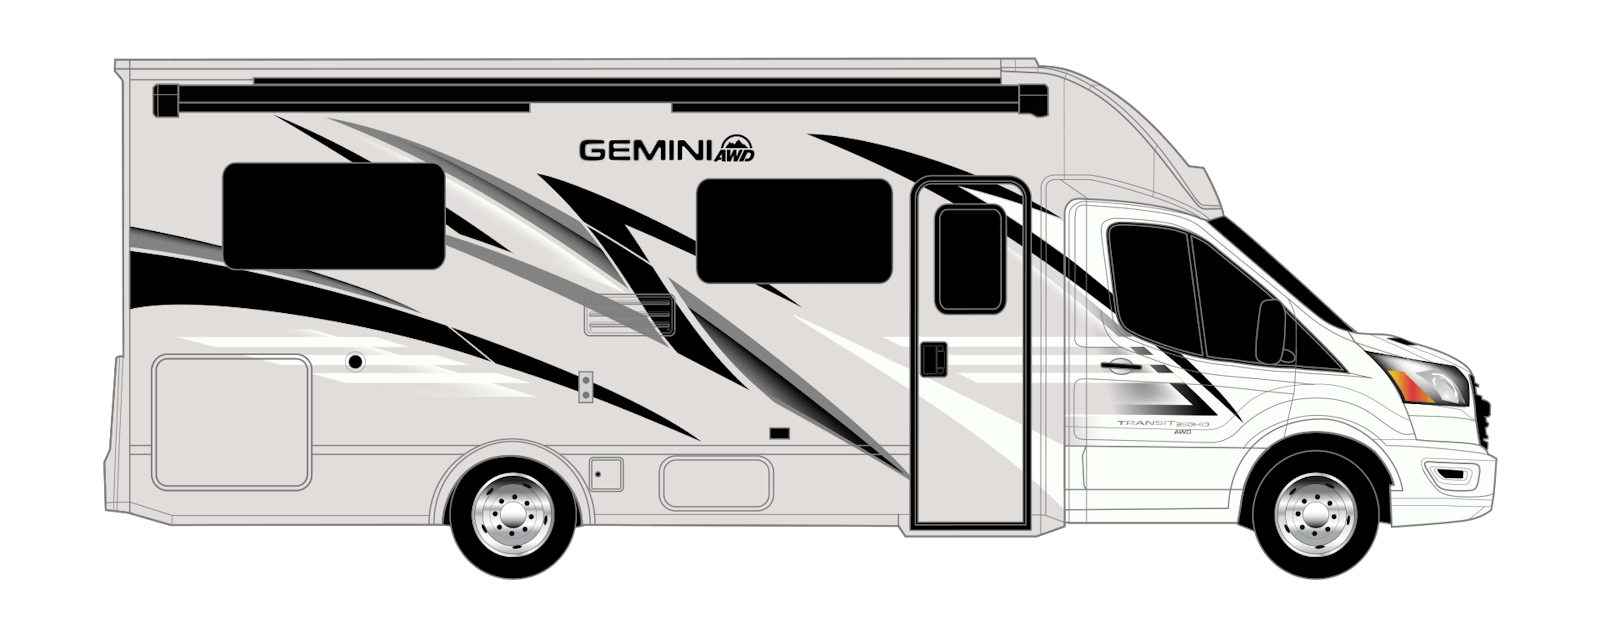 Gemini AWD Glacier Gray Exterior